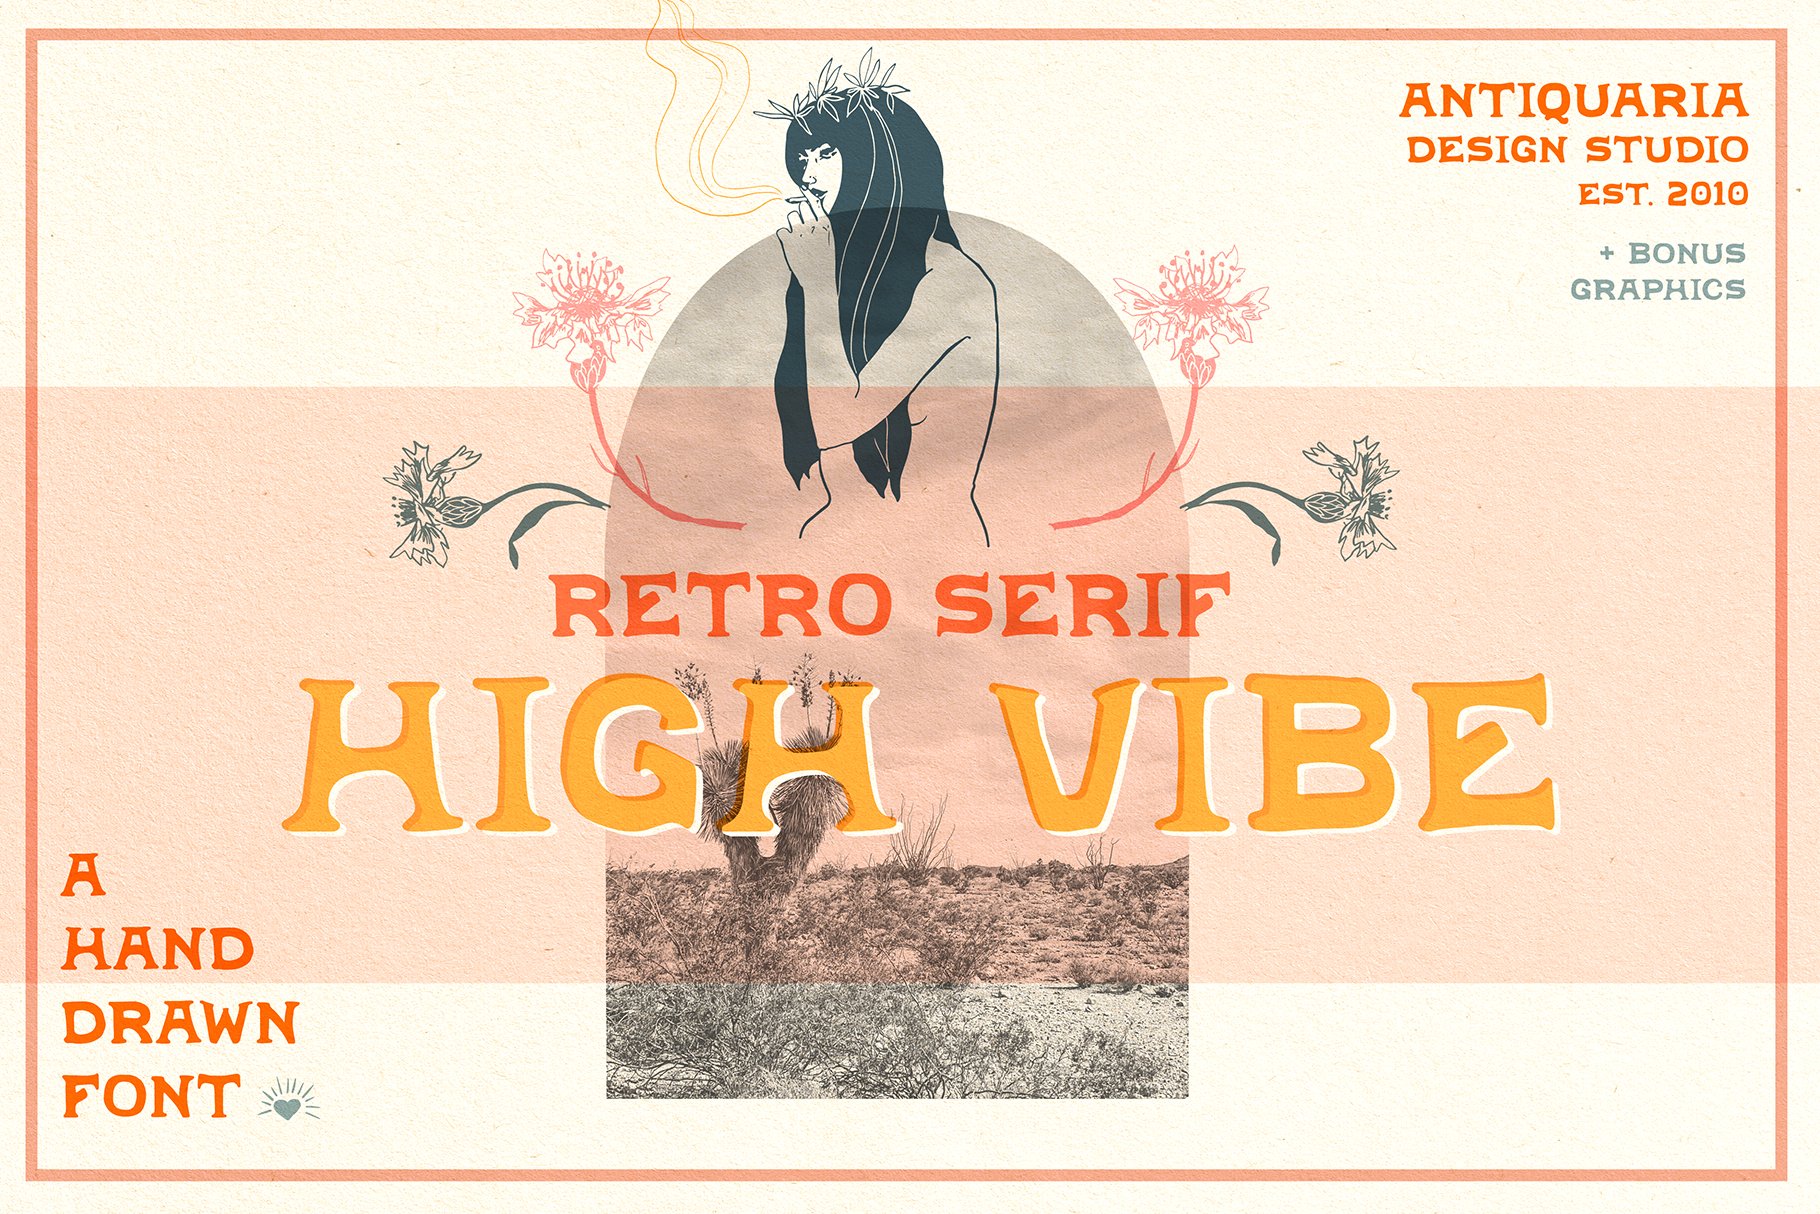 High Vibe - Vintage Retro Serif cover image.